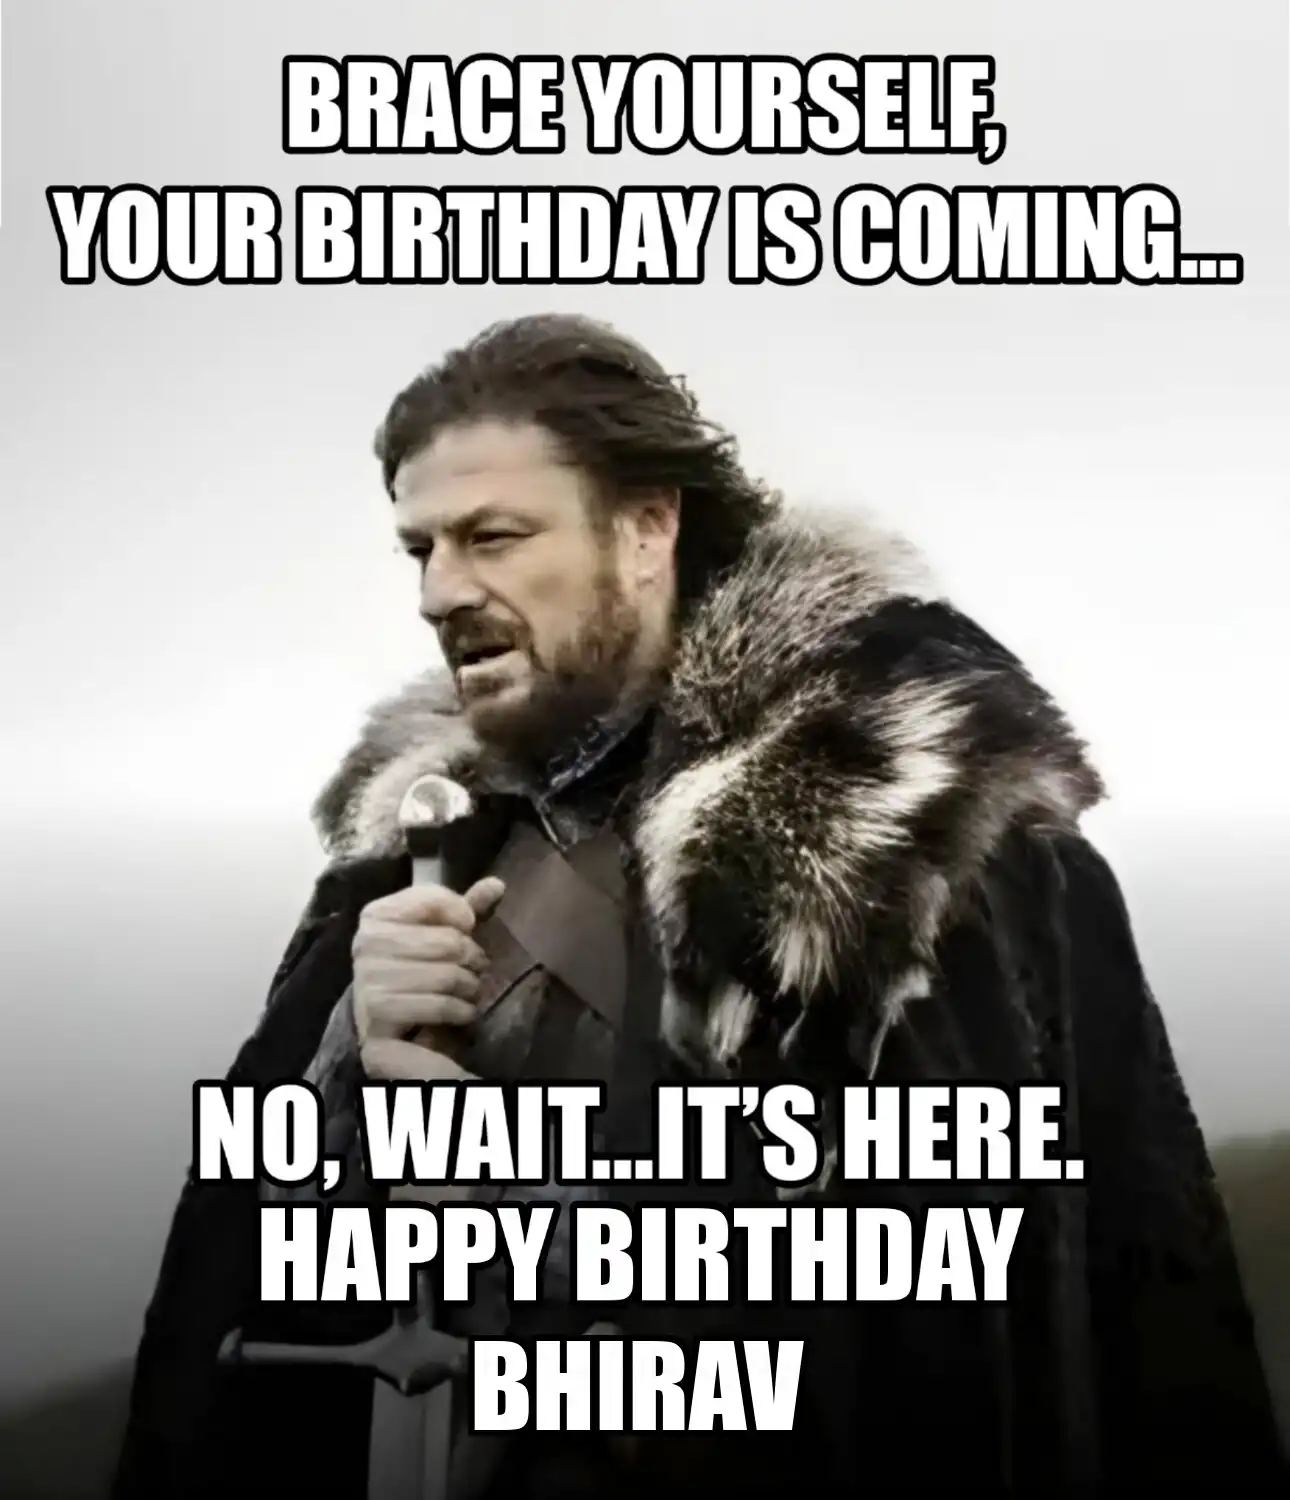 Happy Birthday Bhirav Brace Yourself Your Birthday Is Coming Meme